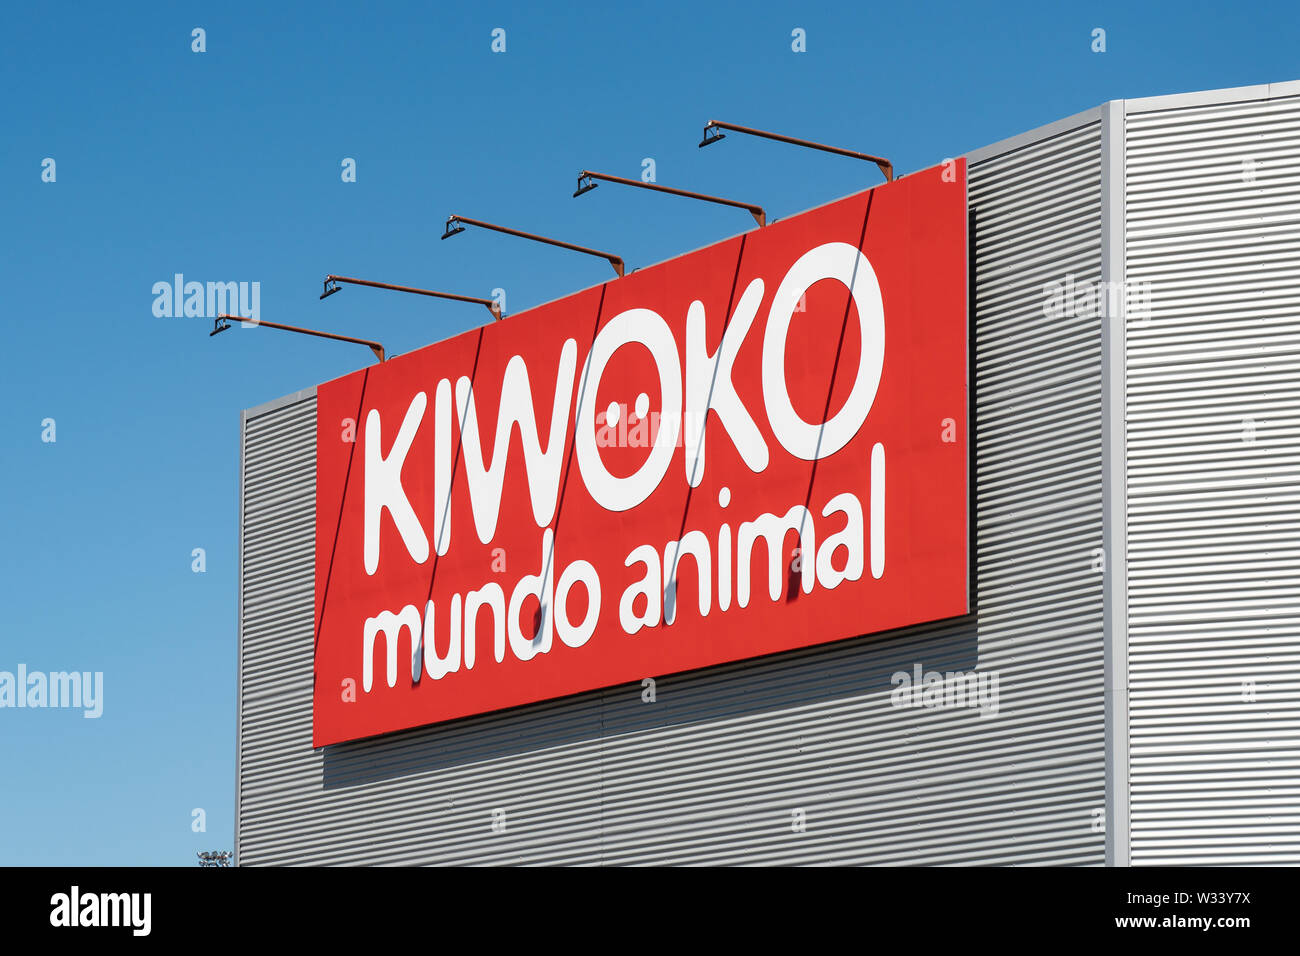 Santiago de Compotela, Spain; july 11 2019: Kiwoko sign on facade. Kiwoko is a spanish pet retailer Stock Photo